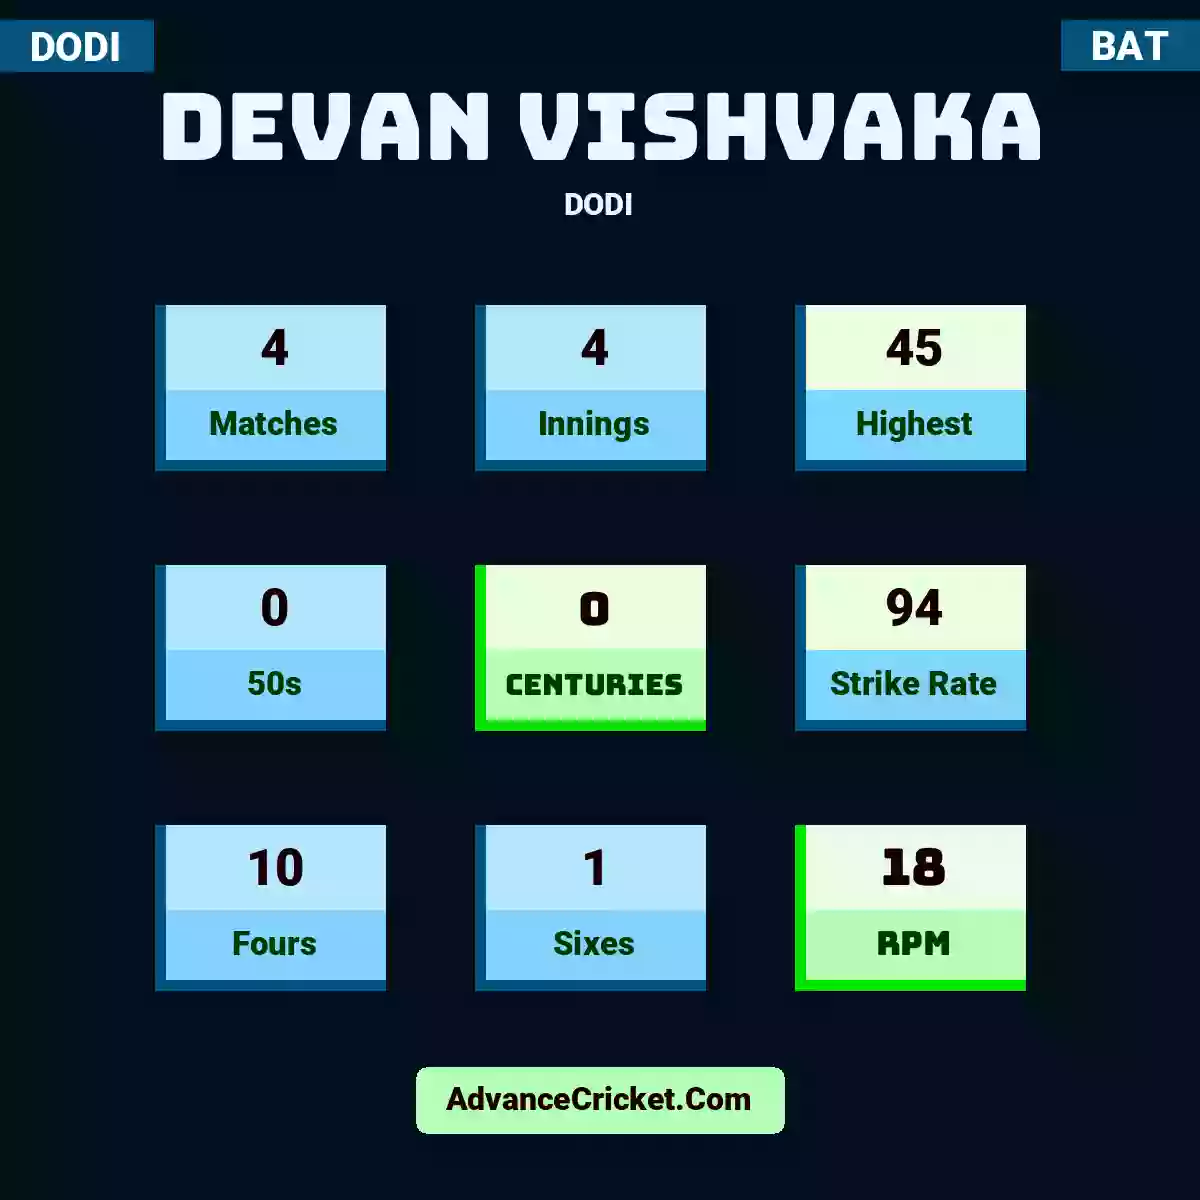 Devan Vishvaka DODI , Devan Vishvaka played 4 matches, scored 45 runs as highest, 0 half-centuries, and 0 centuries, with a strike rate of 94. D.Vishvaka hit 10 fours and 1 sixes, with an RPM of 18.